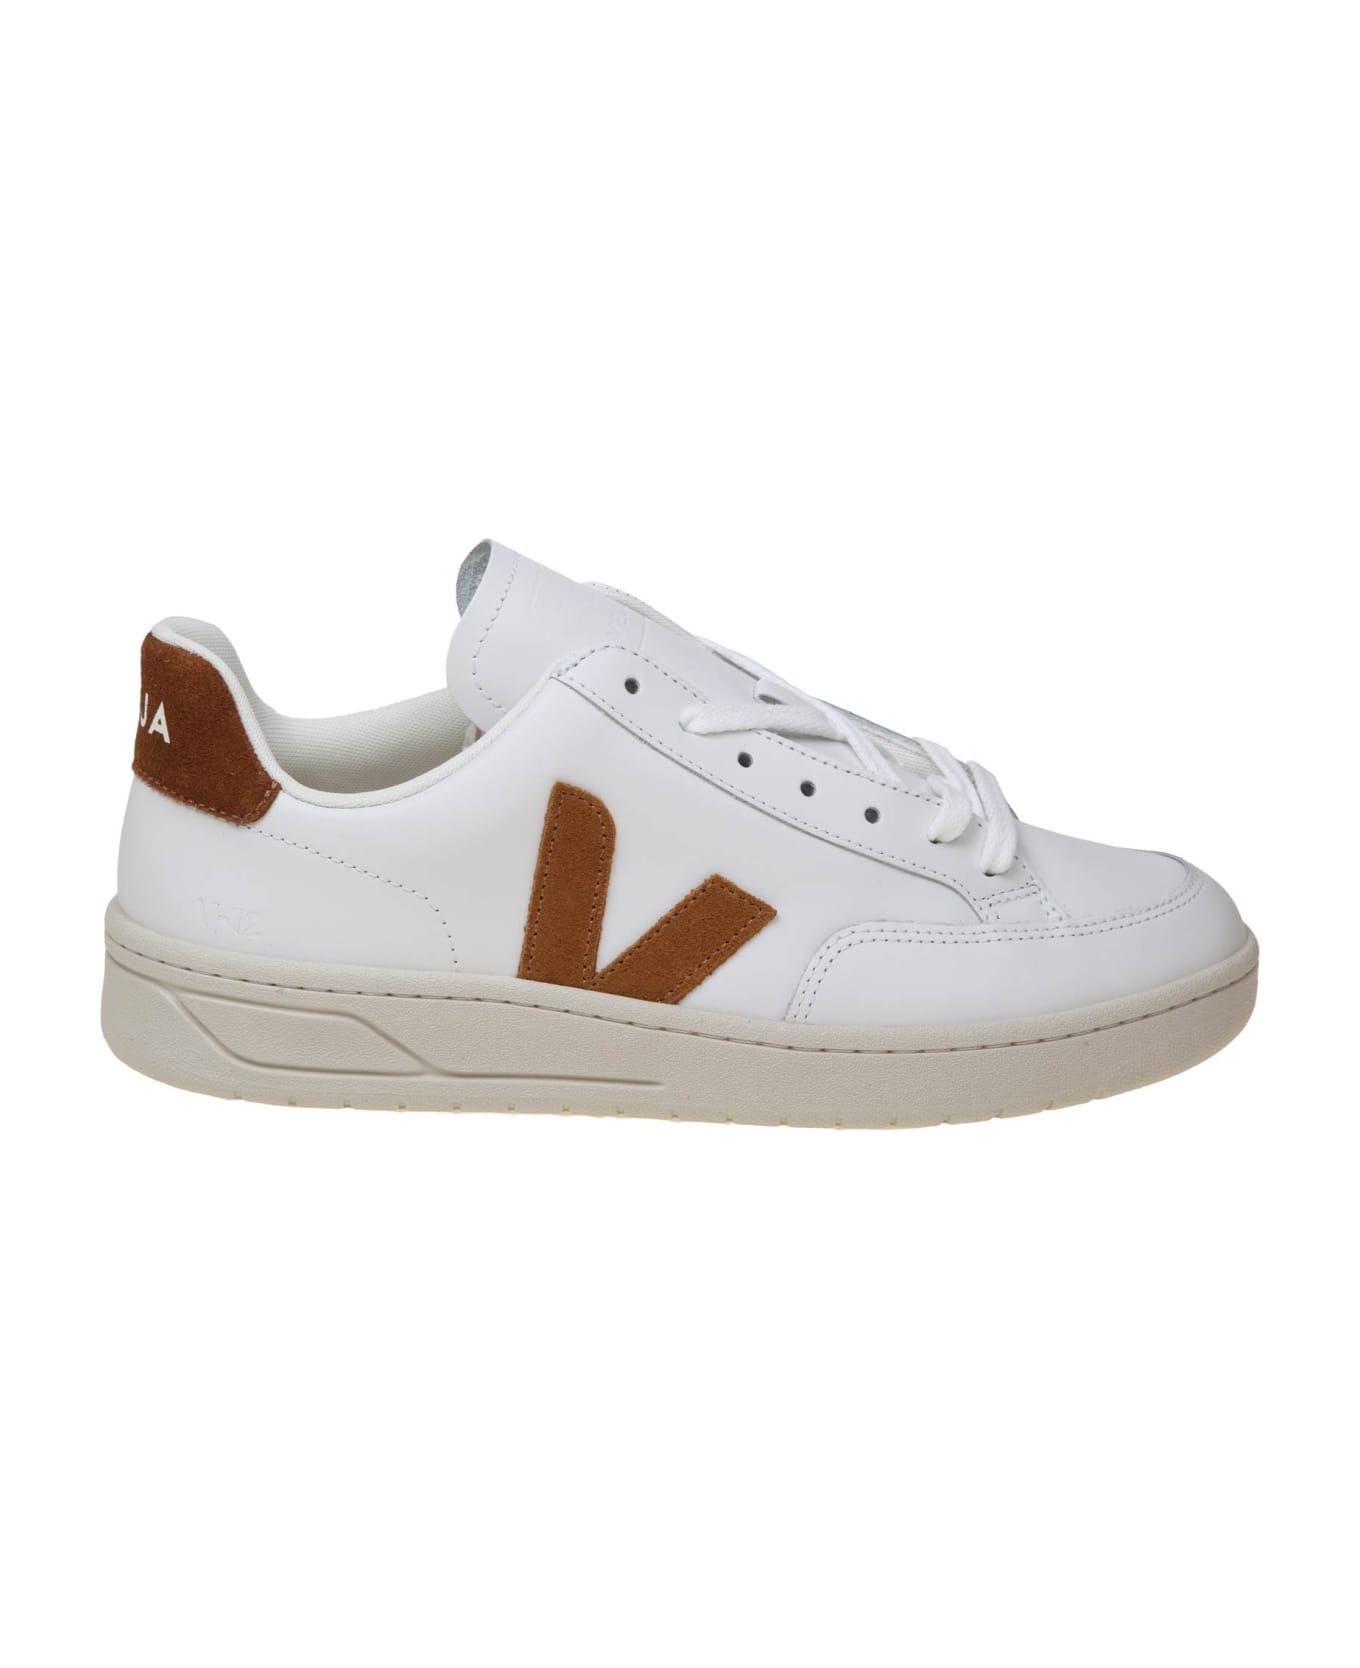 Veja V 90 Sneakers In White And Camel Leather - WHITE/CAMEL スニーカー